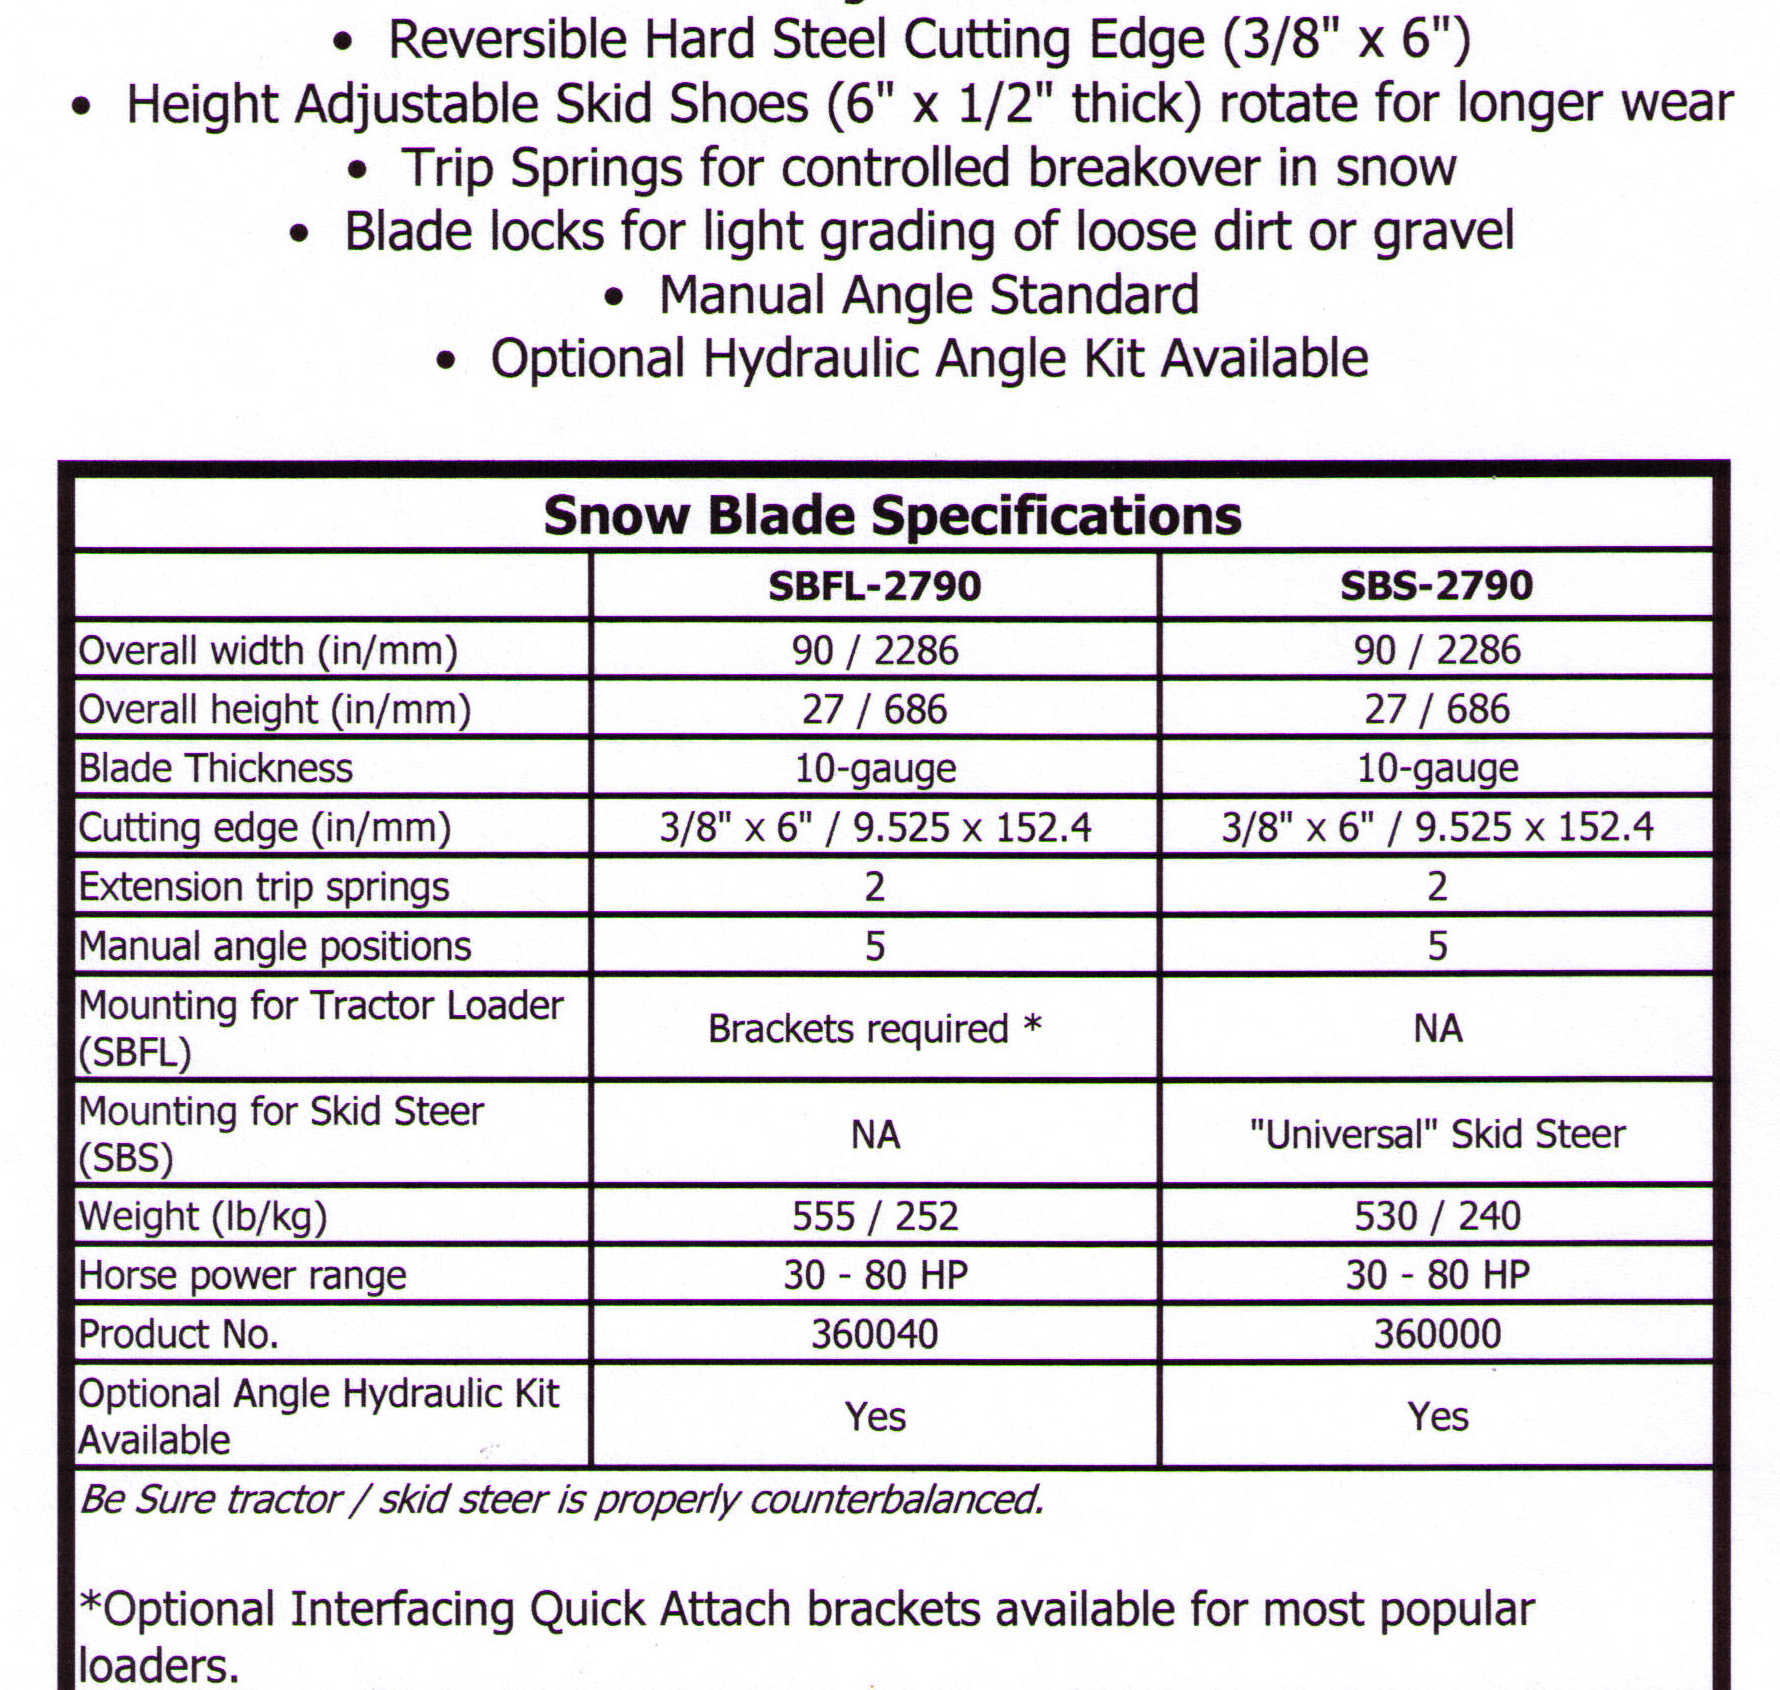 Specifications Skid Steer Or Tractor Loader Mounted Snowblade